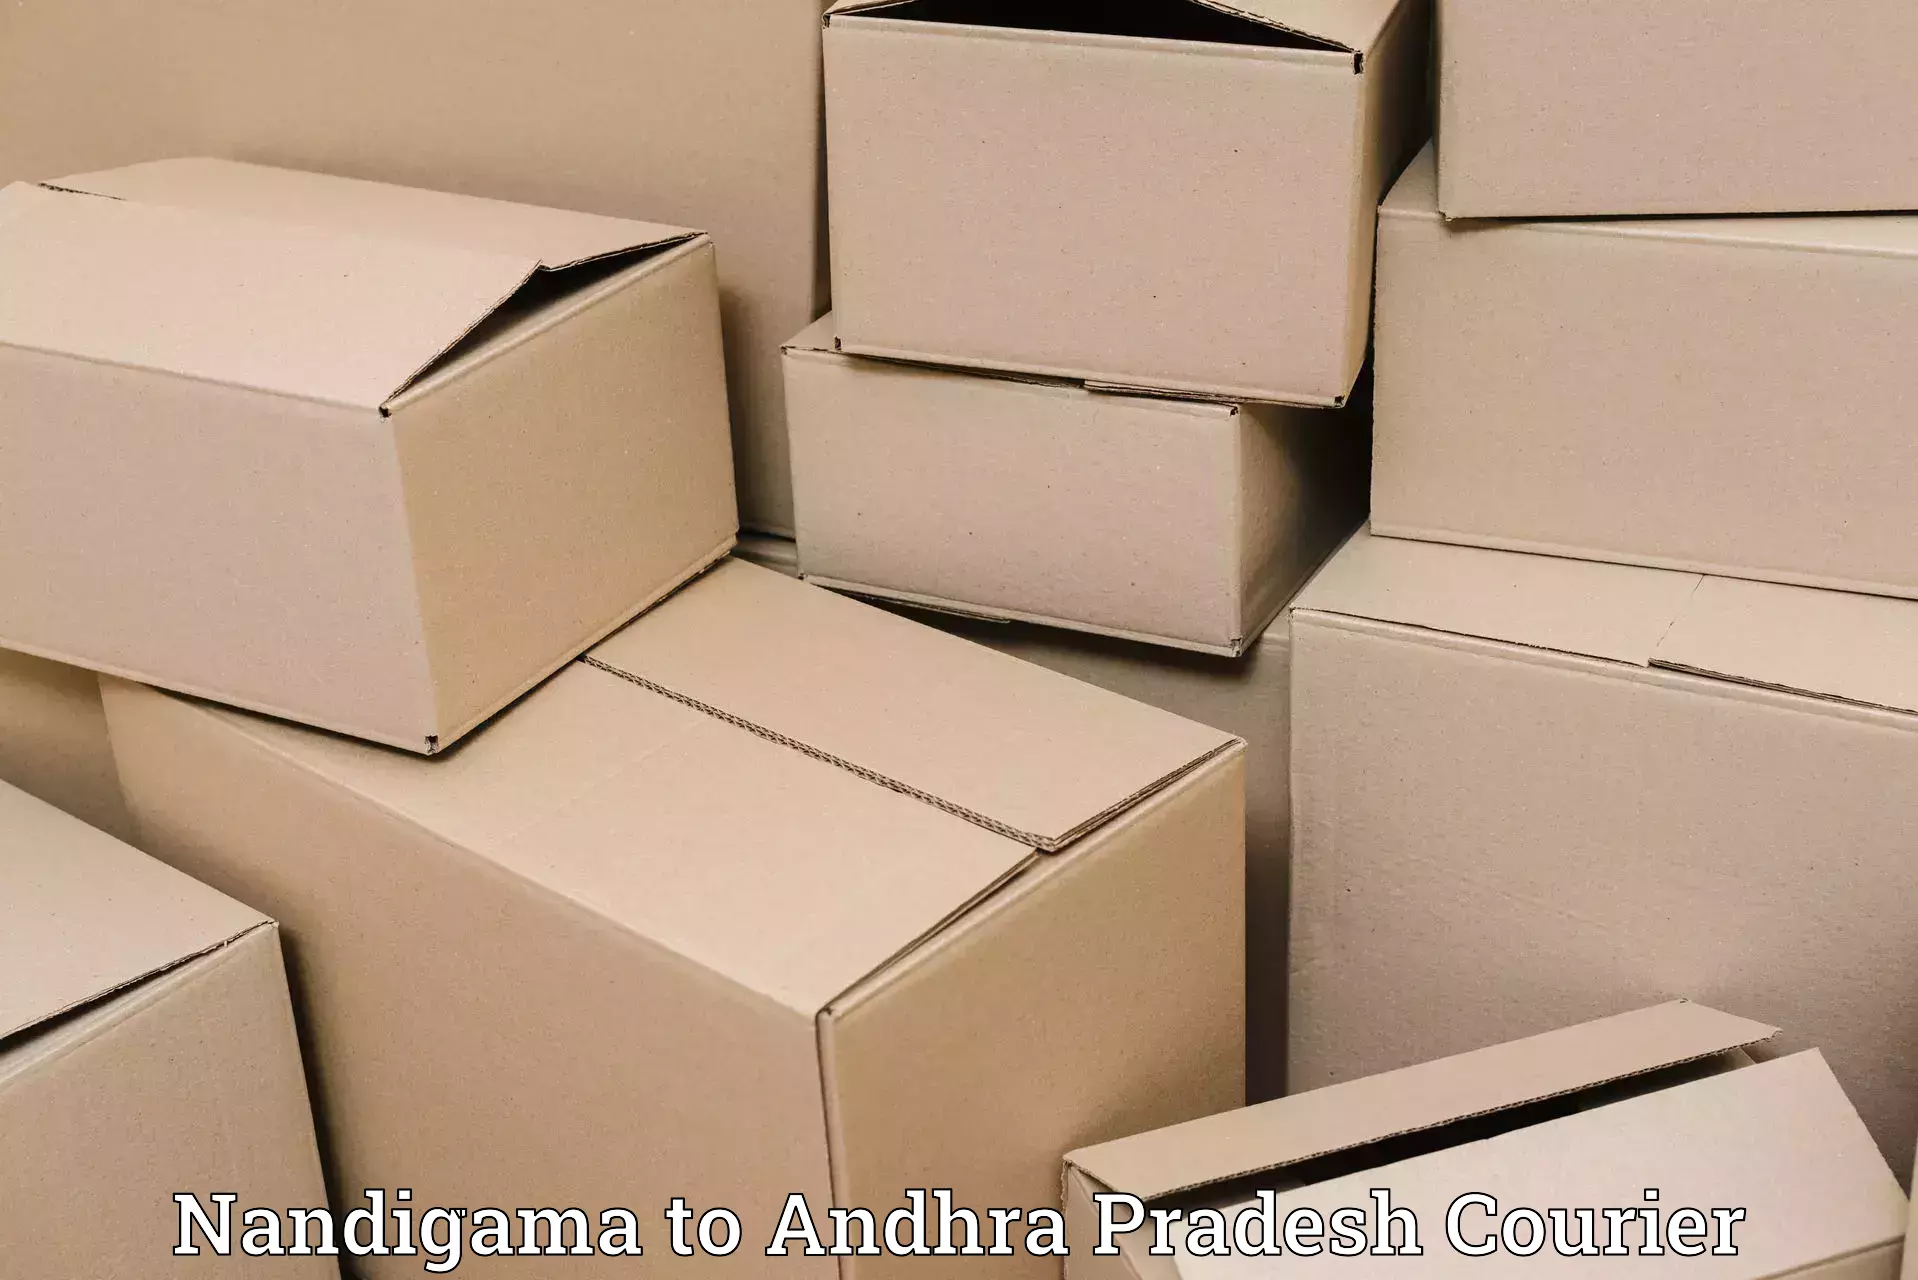 International parcel service Nandigama to Gullapalli